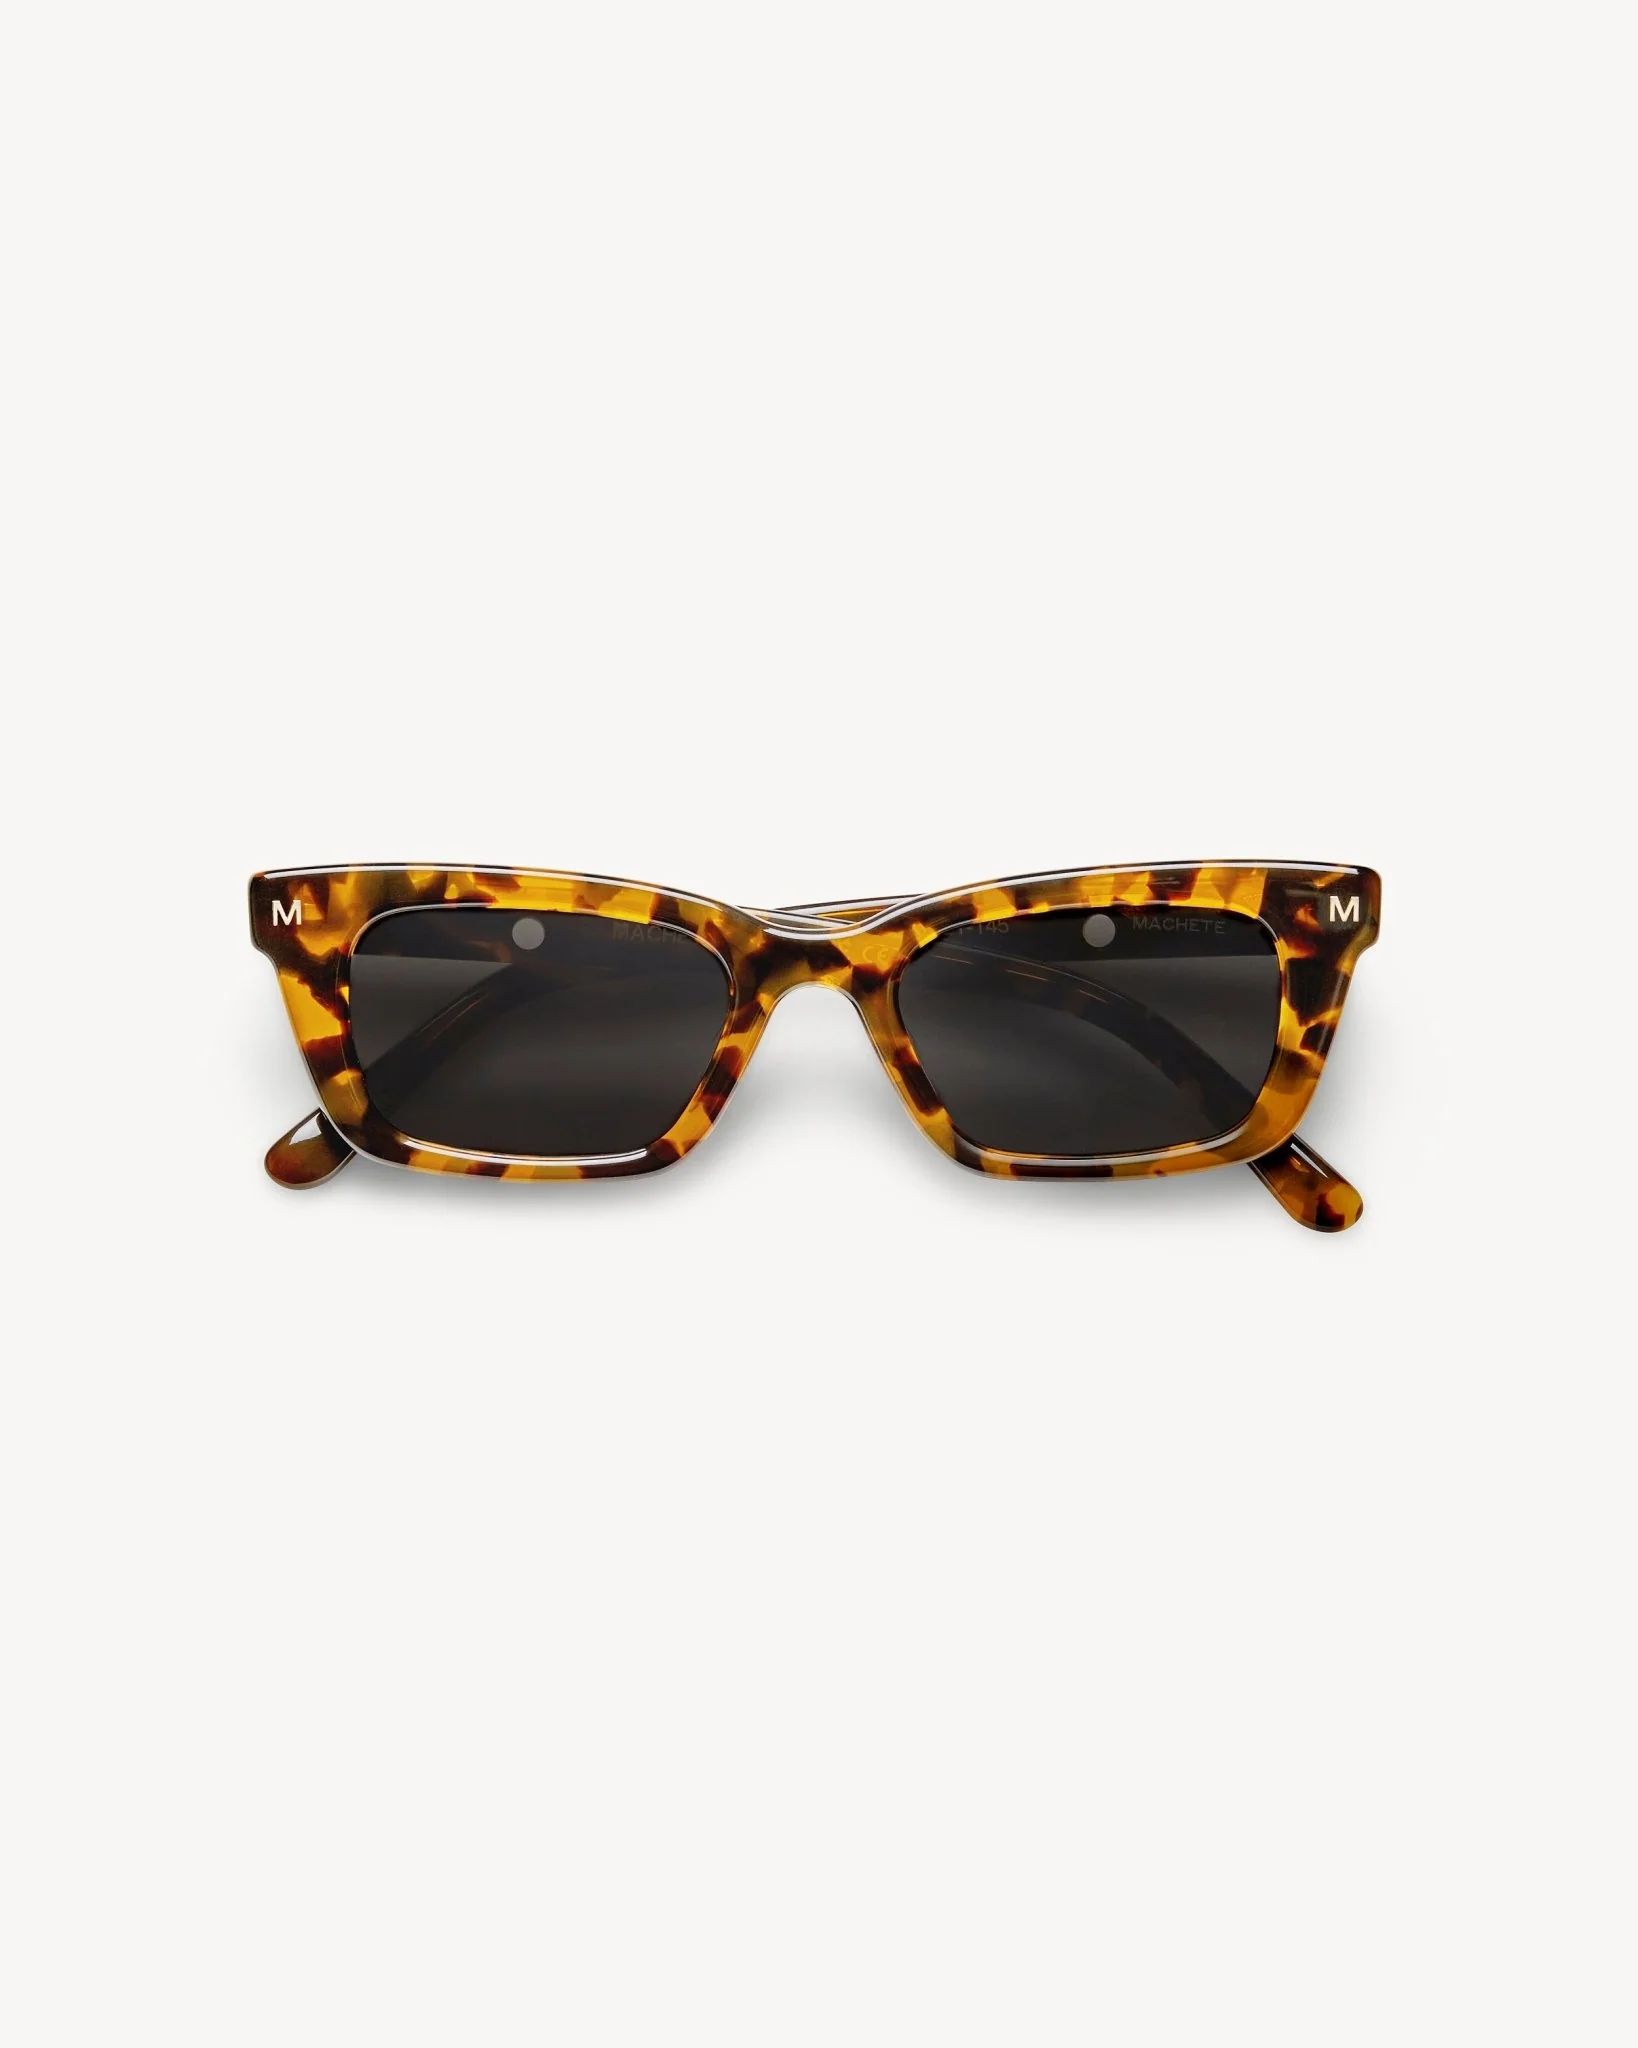 Ruby ‘90s Sunglasses in Classic Tortoise - Machete | Machete